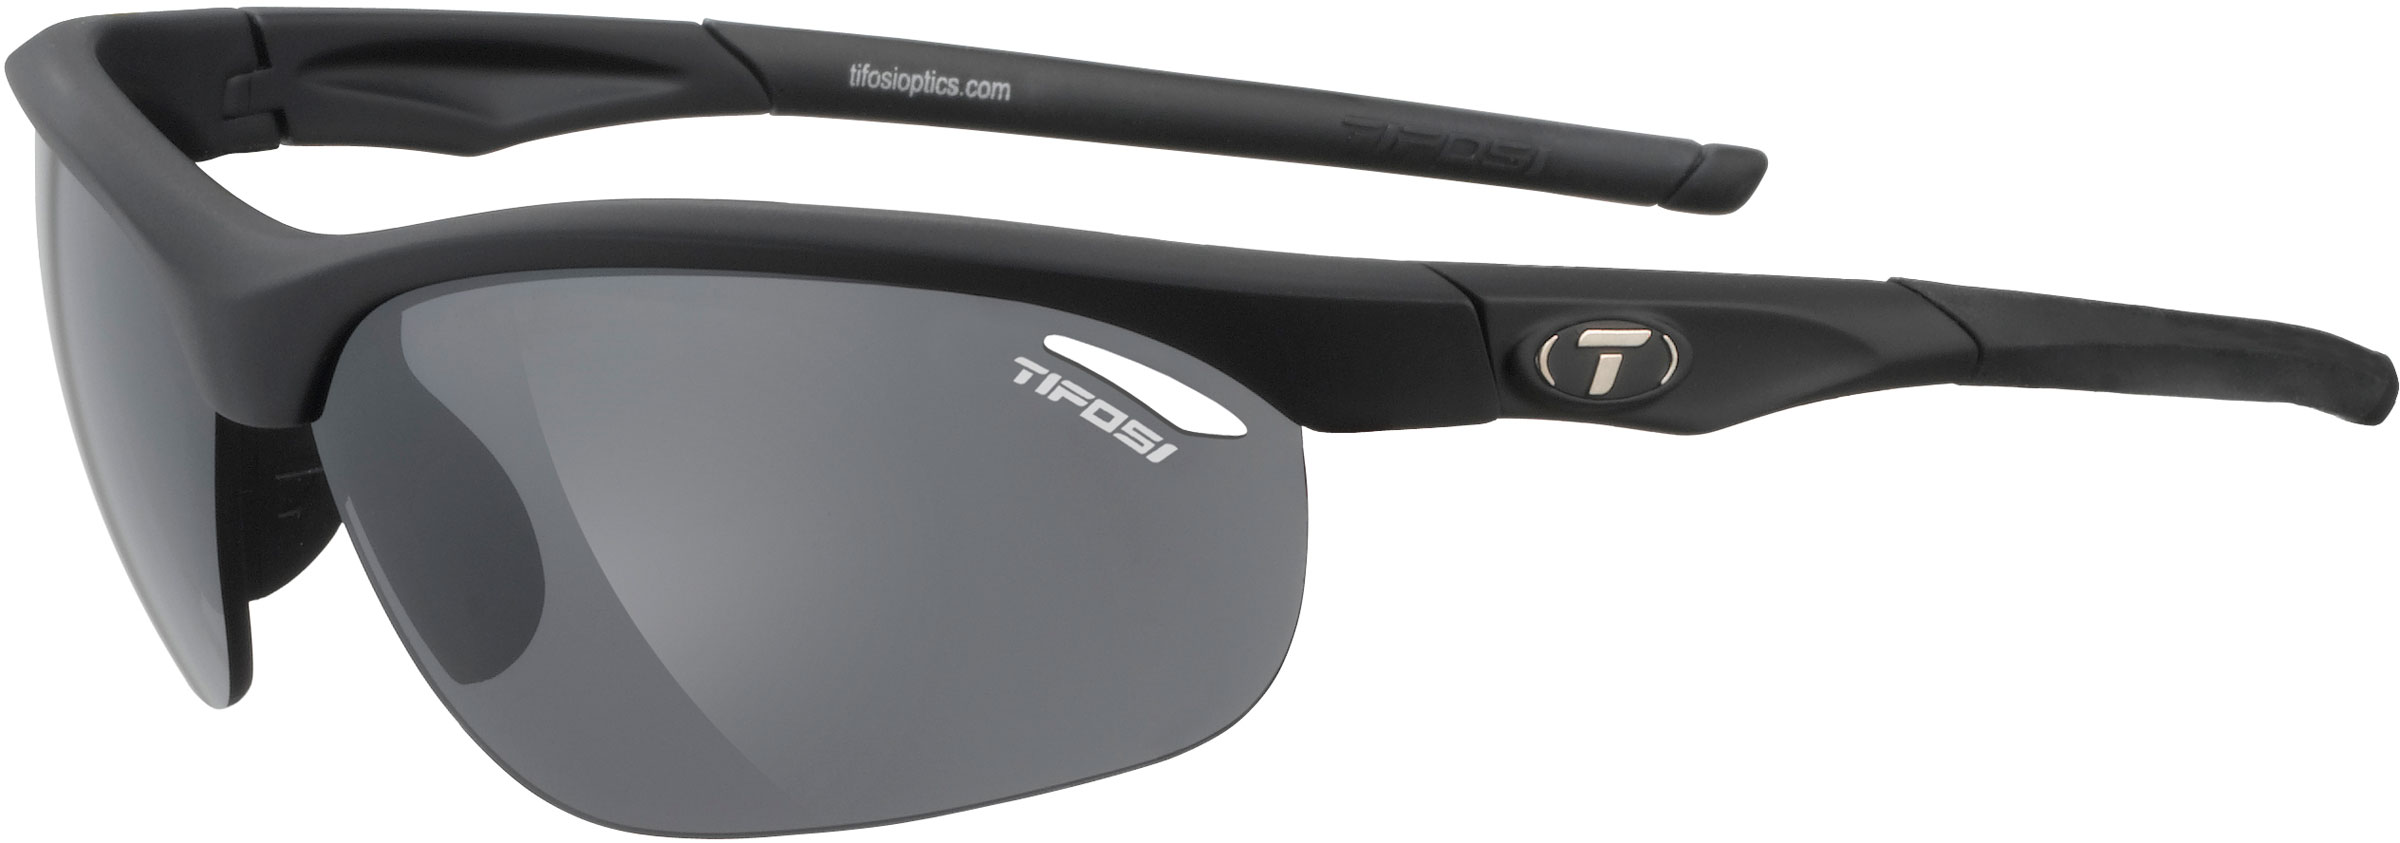 Details about   TIFOSI VELOCE Cycling Biking Glasses Sunglasses Sports Eyewear Lightweight 